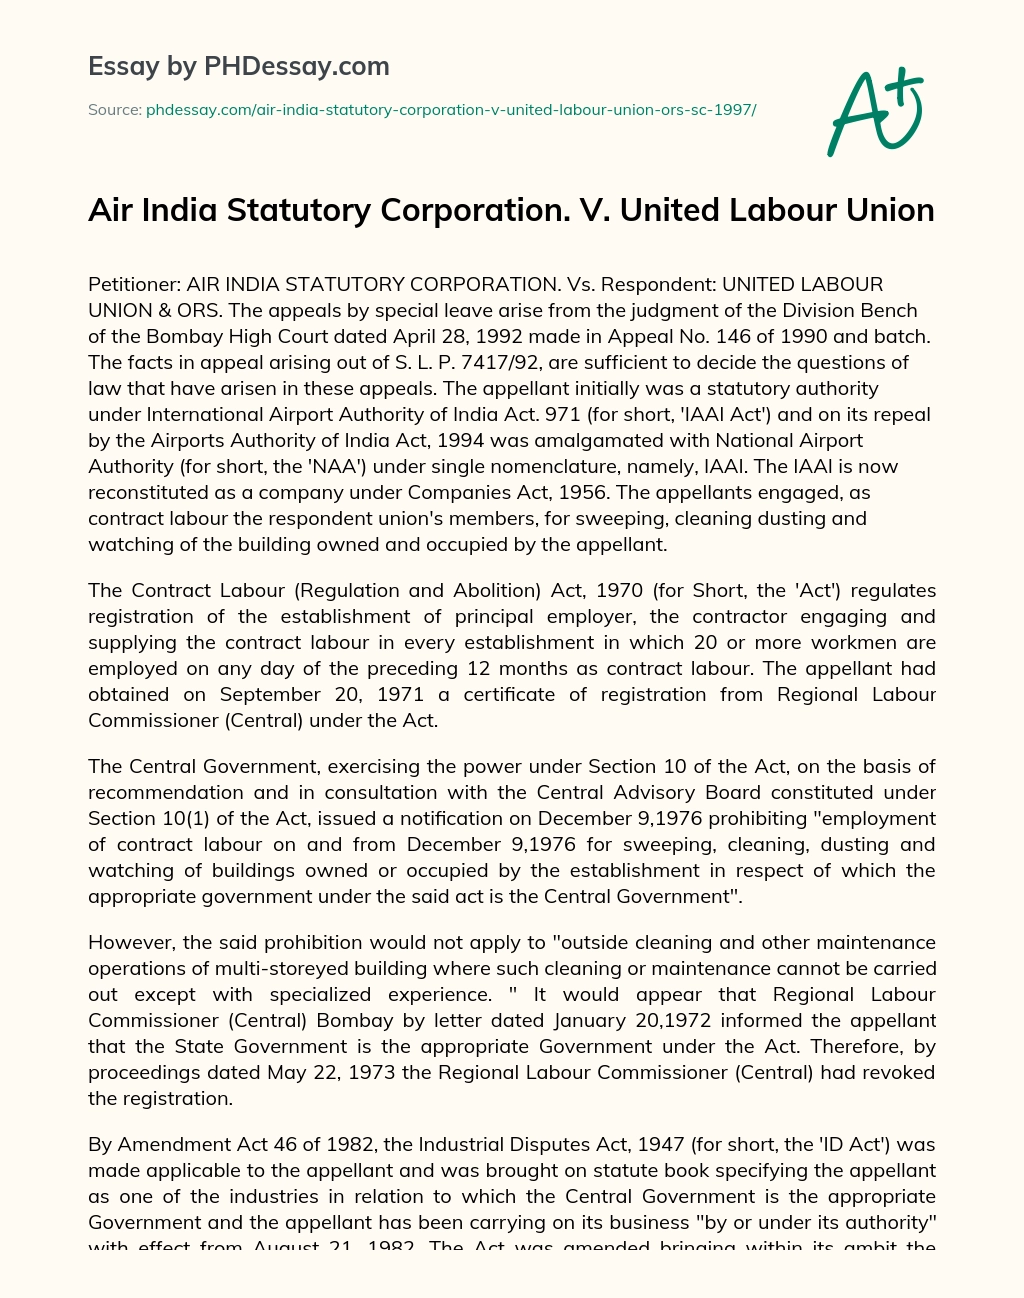 Air India Statutory Corporation. V. United Labour Union essay